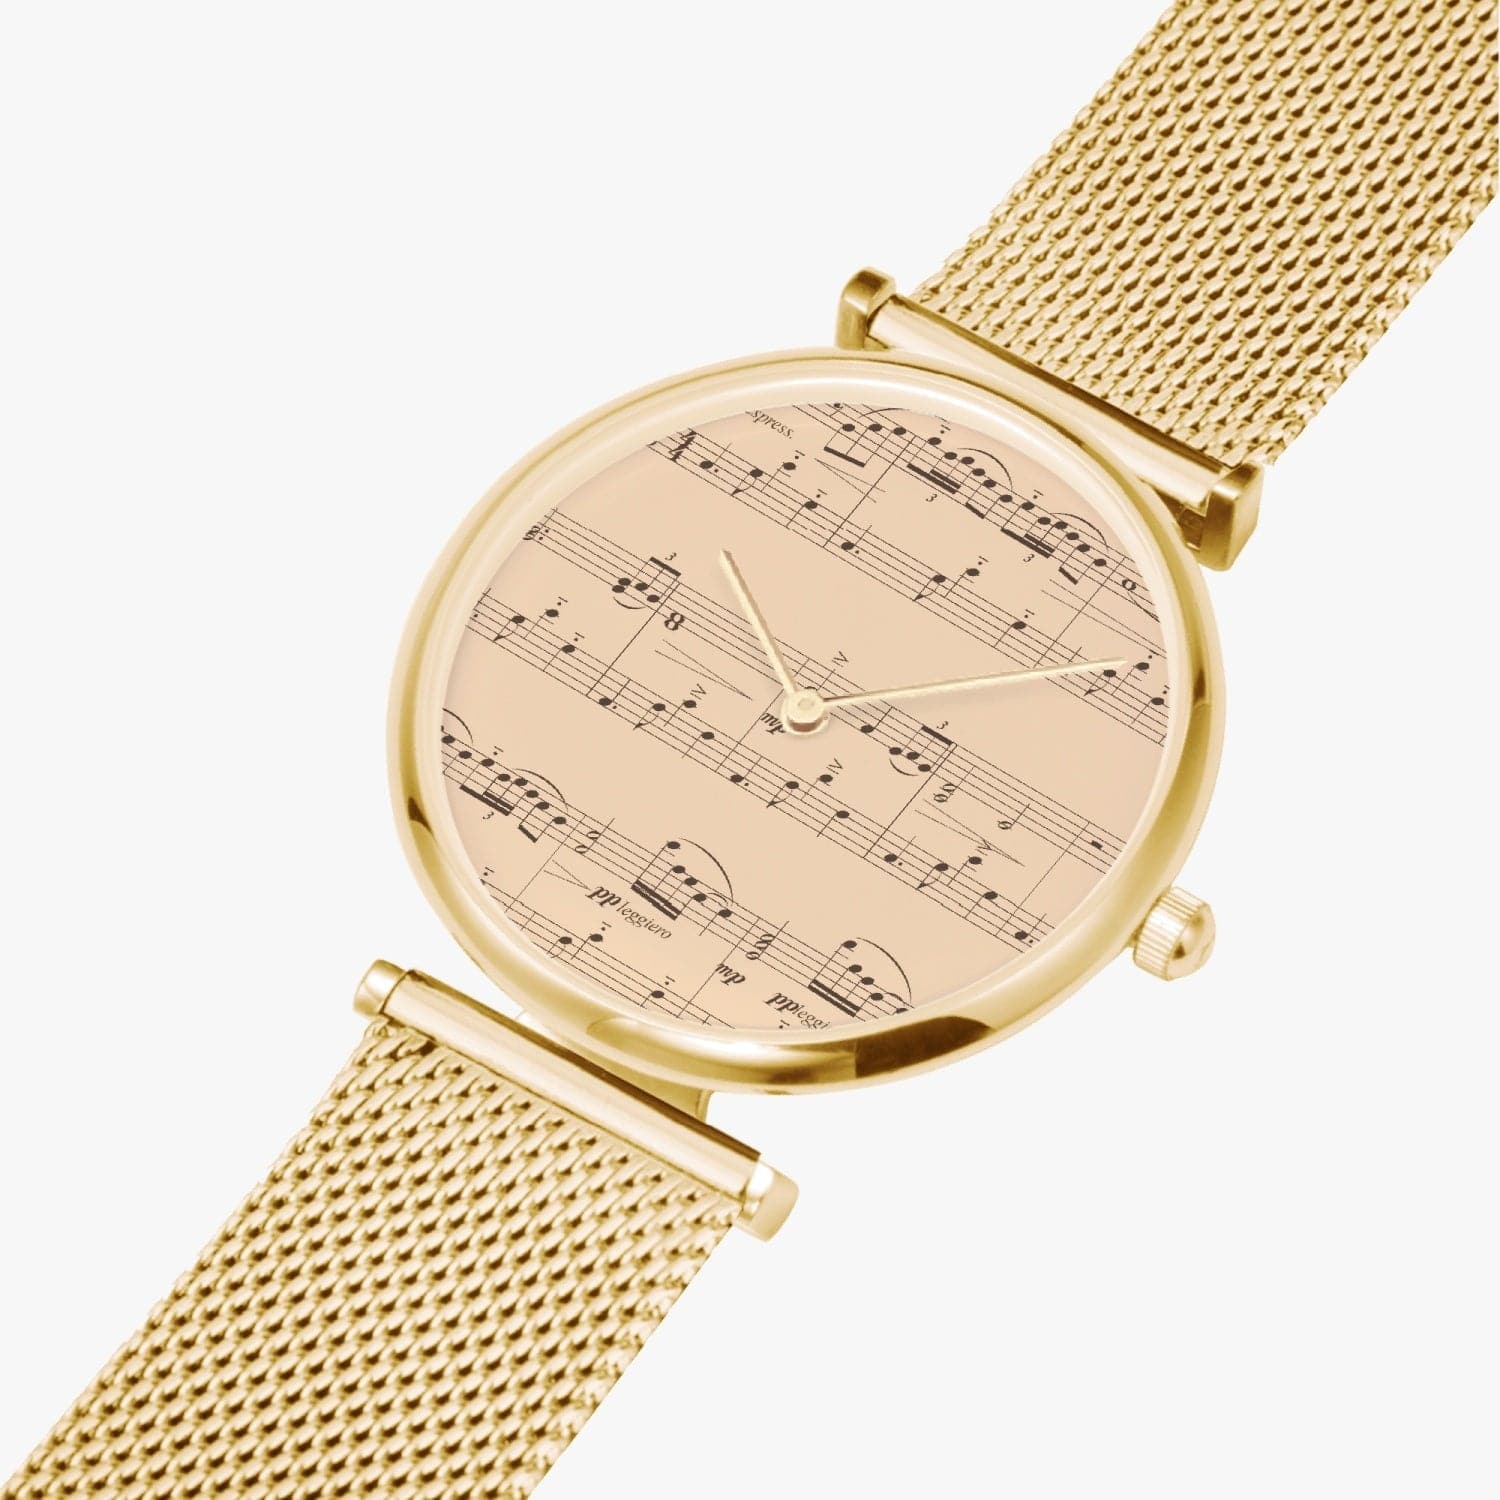 Tango music, New Stylish Ultra-Thin Quartz Watch. Designer watch by Ingrid Hütten